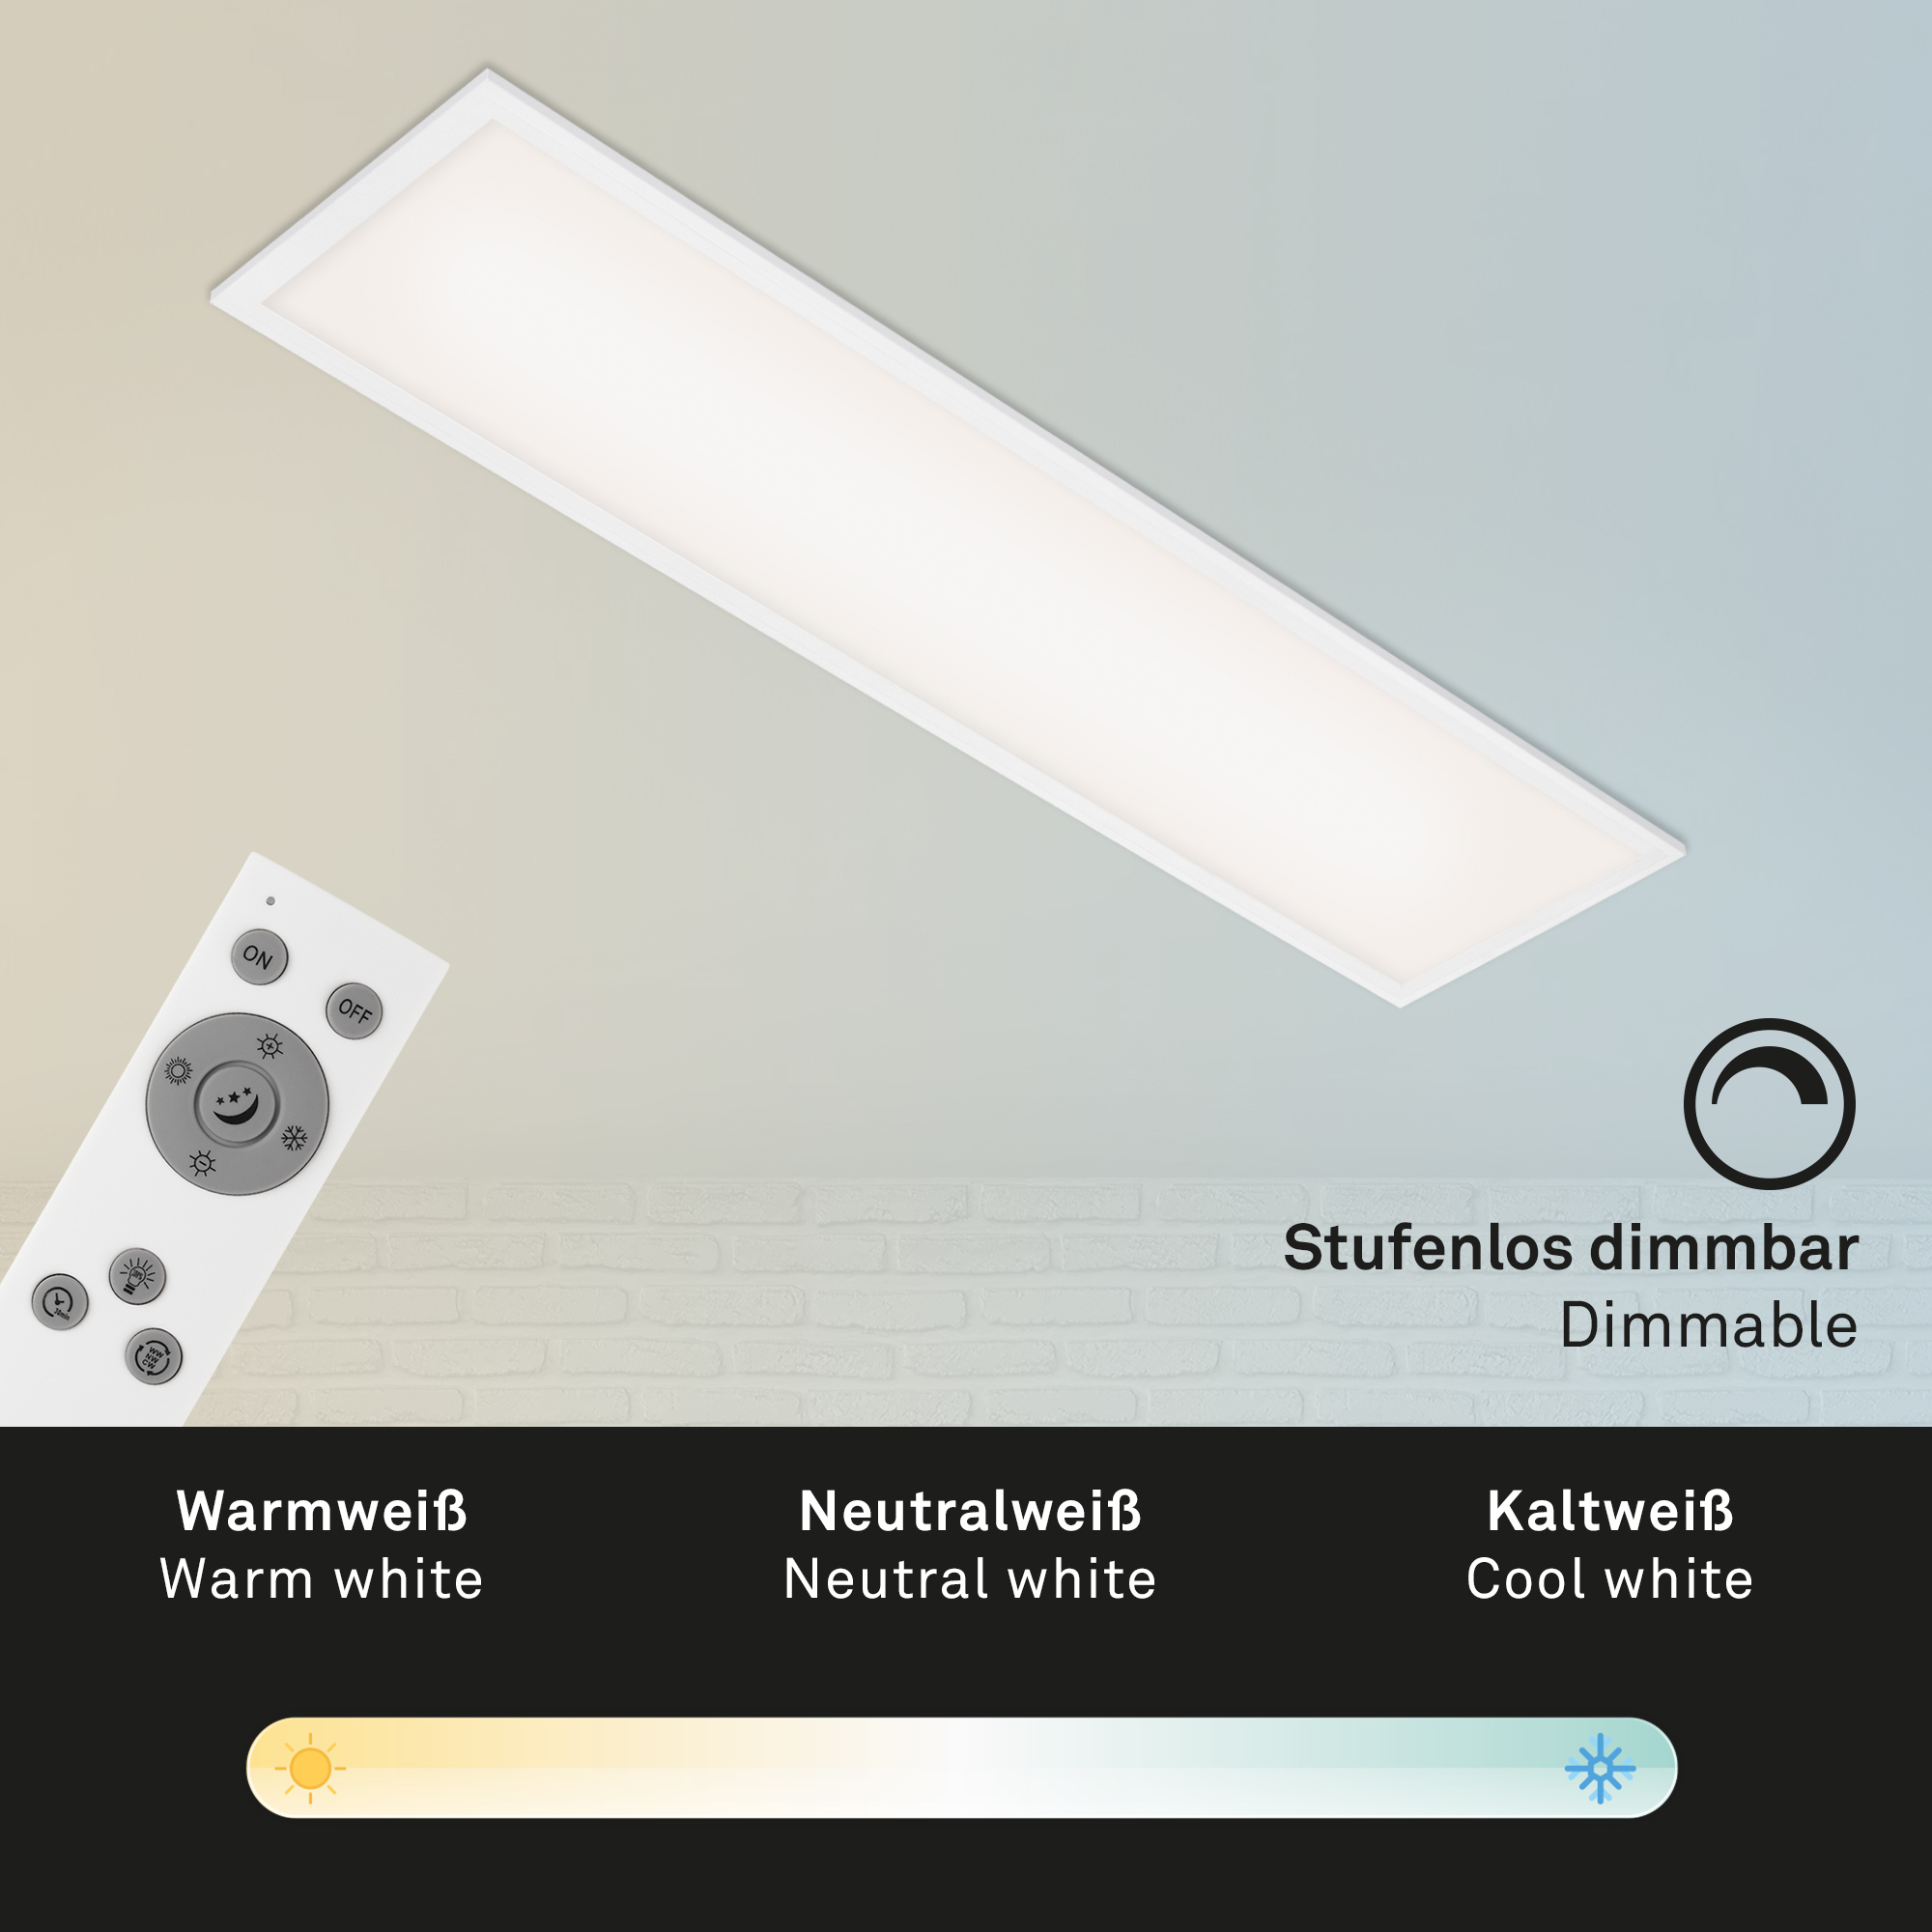 Briloner LED Panel, weiß, dimmbar